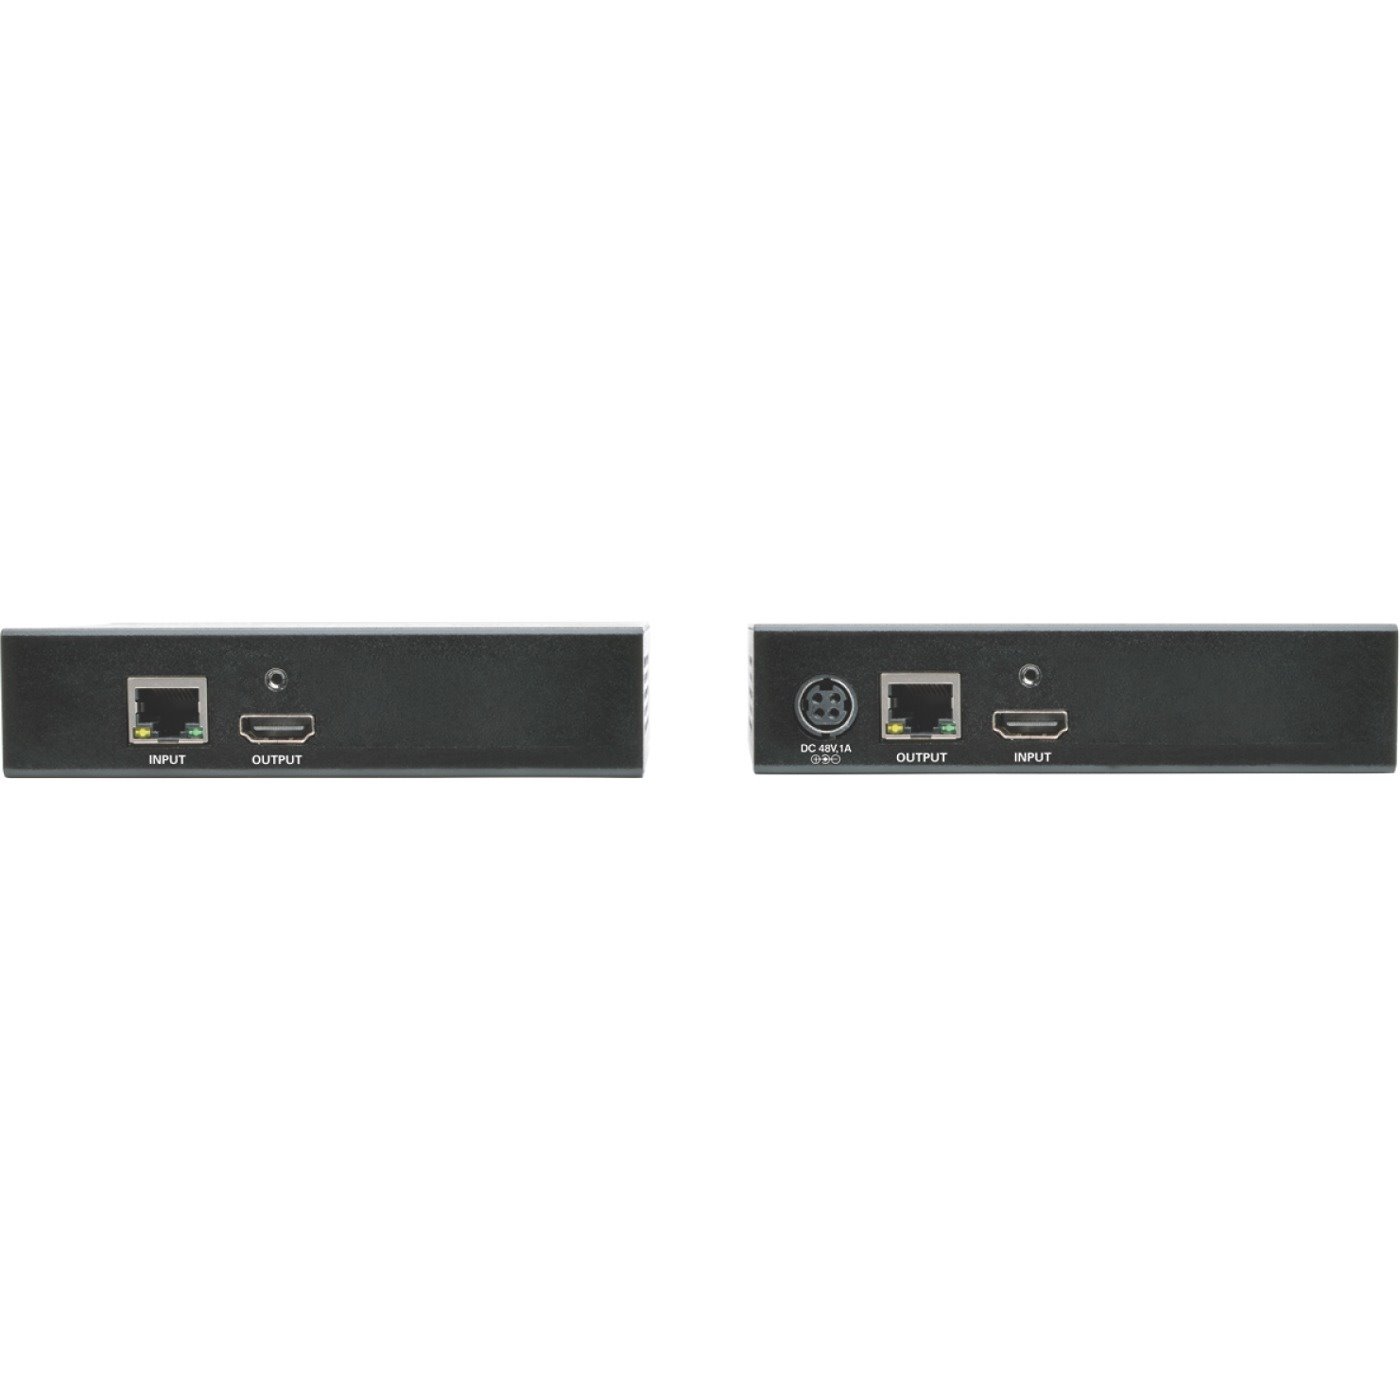 Tripp Lite by Eaton HDBaseT Class B (HDBaseT-Lite) HDMI over Cat5e/6/6a Extender Kit with Power, Serial & IR, 4K x 2K 30 Hz UHD / 1080p 60 Hz, Up to 230 ft. (70 m), TAA